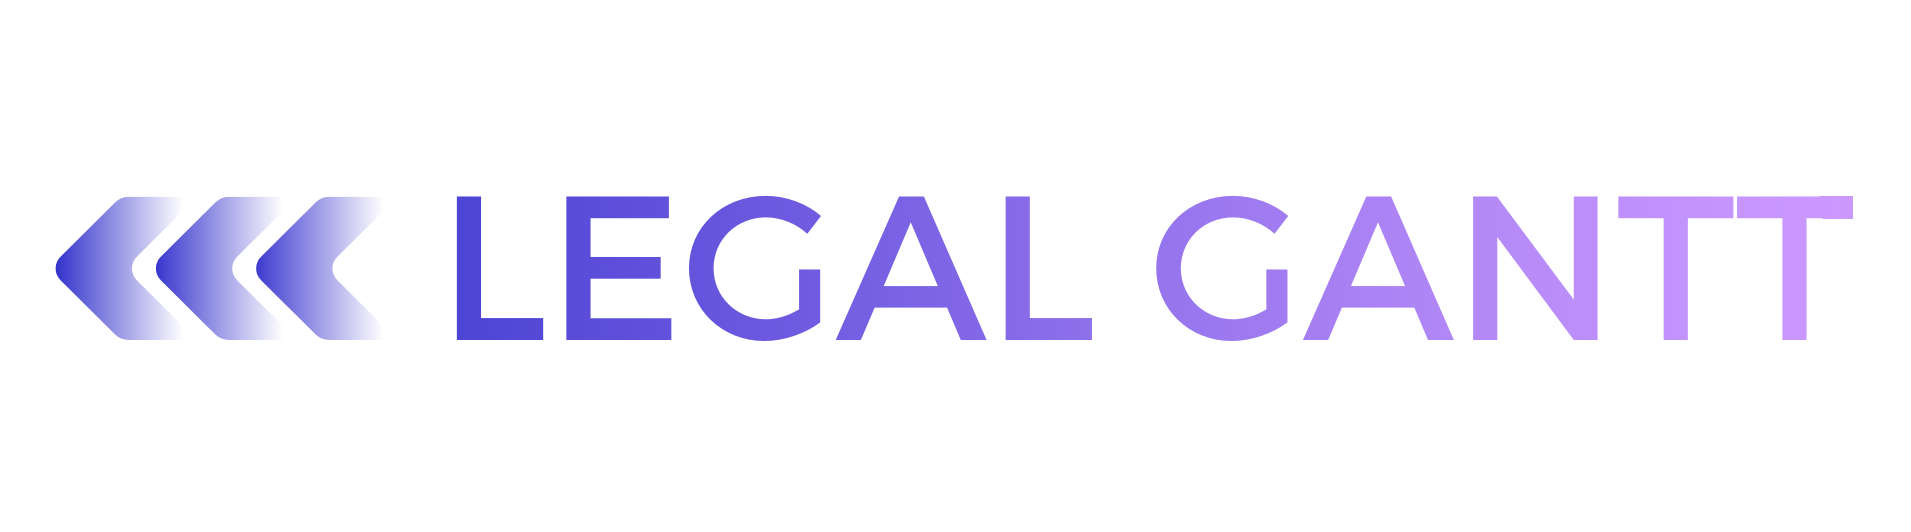 legal-gantt.md logo